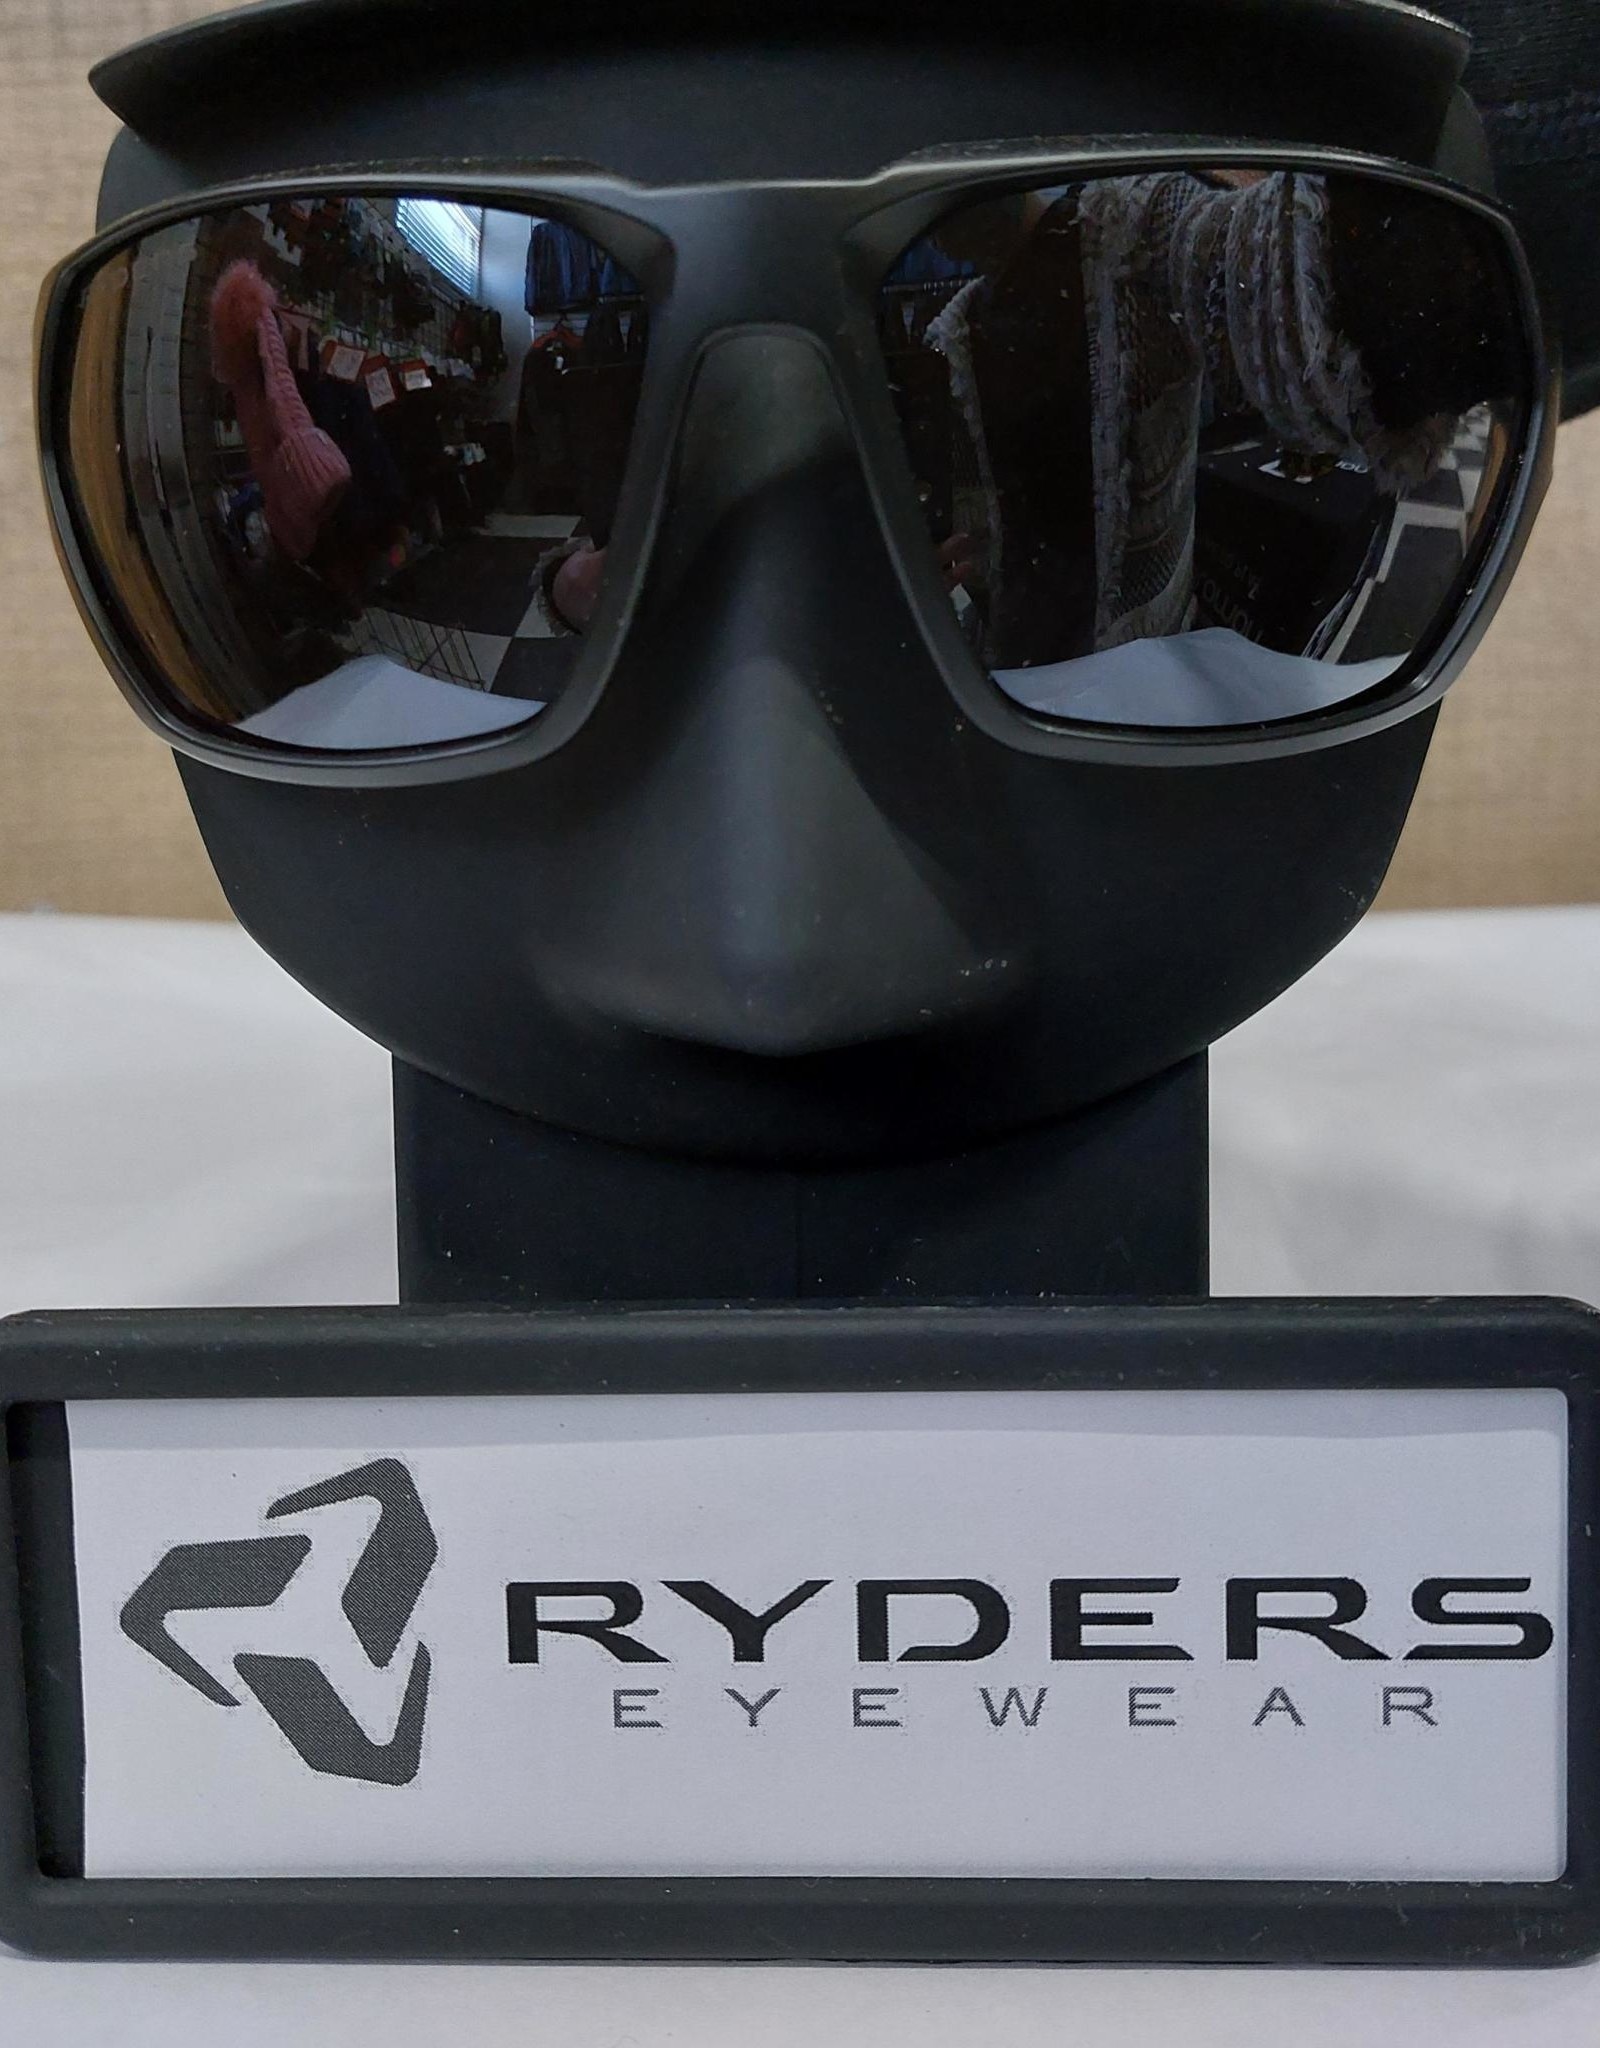 Ryders Ryders FACE POLY BLACK MATTE - BLUE / BROWN LENS